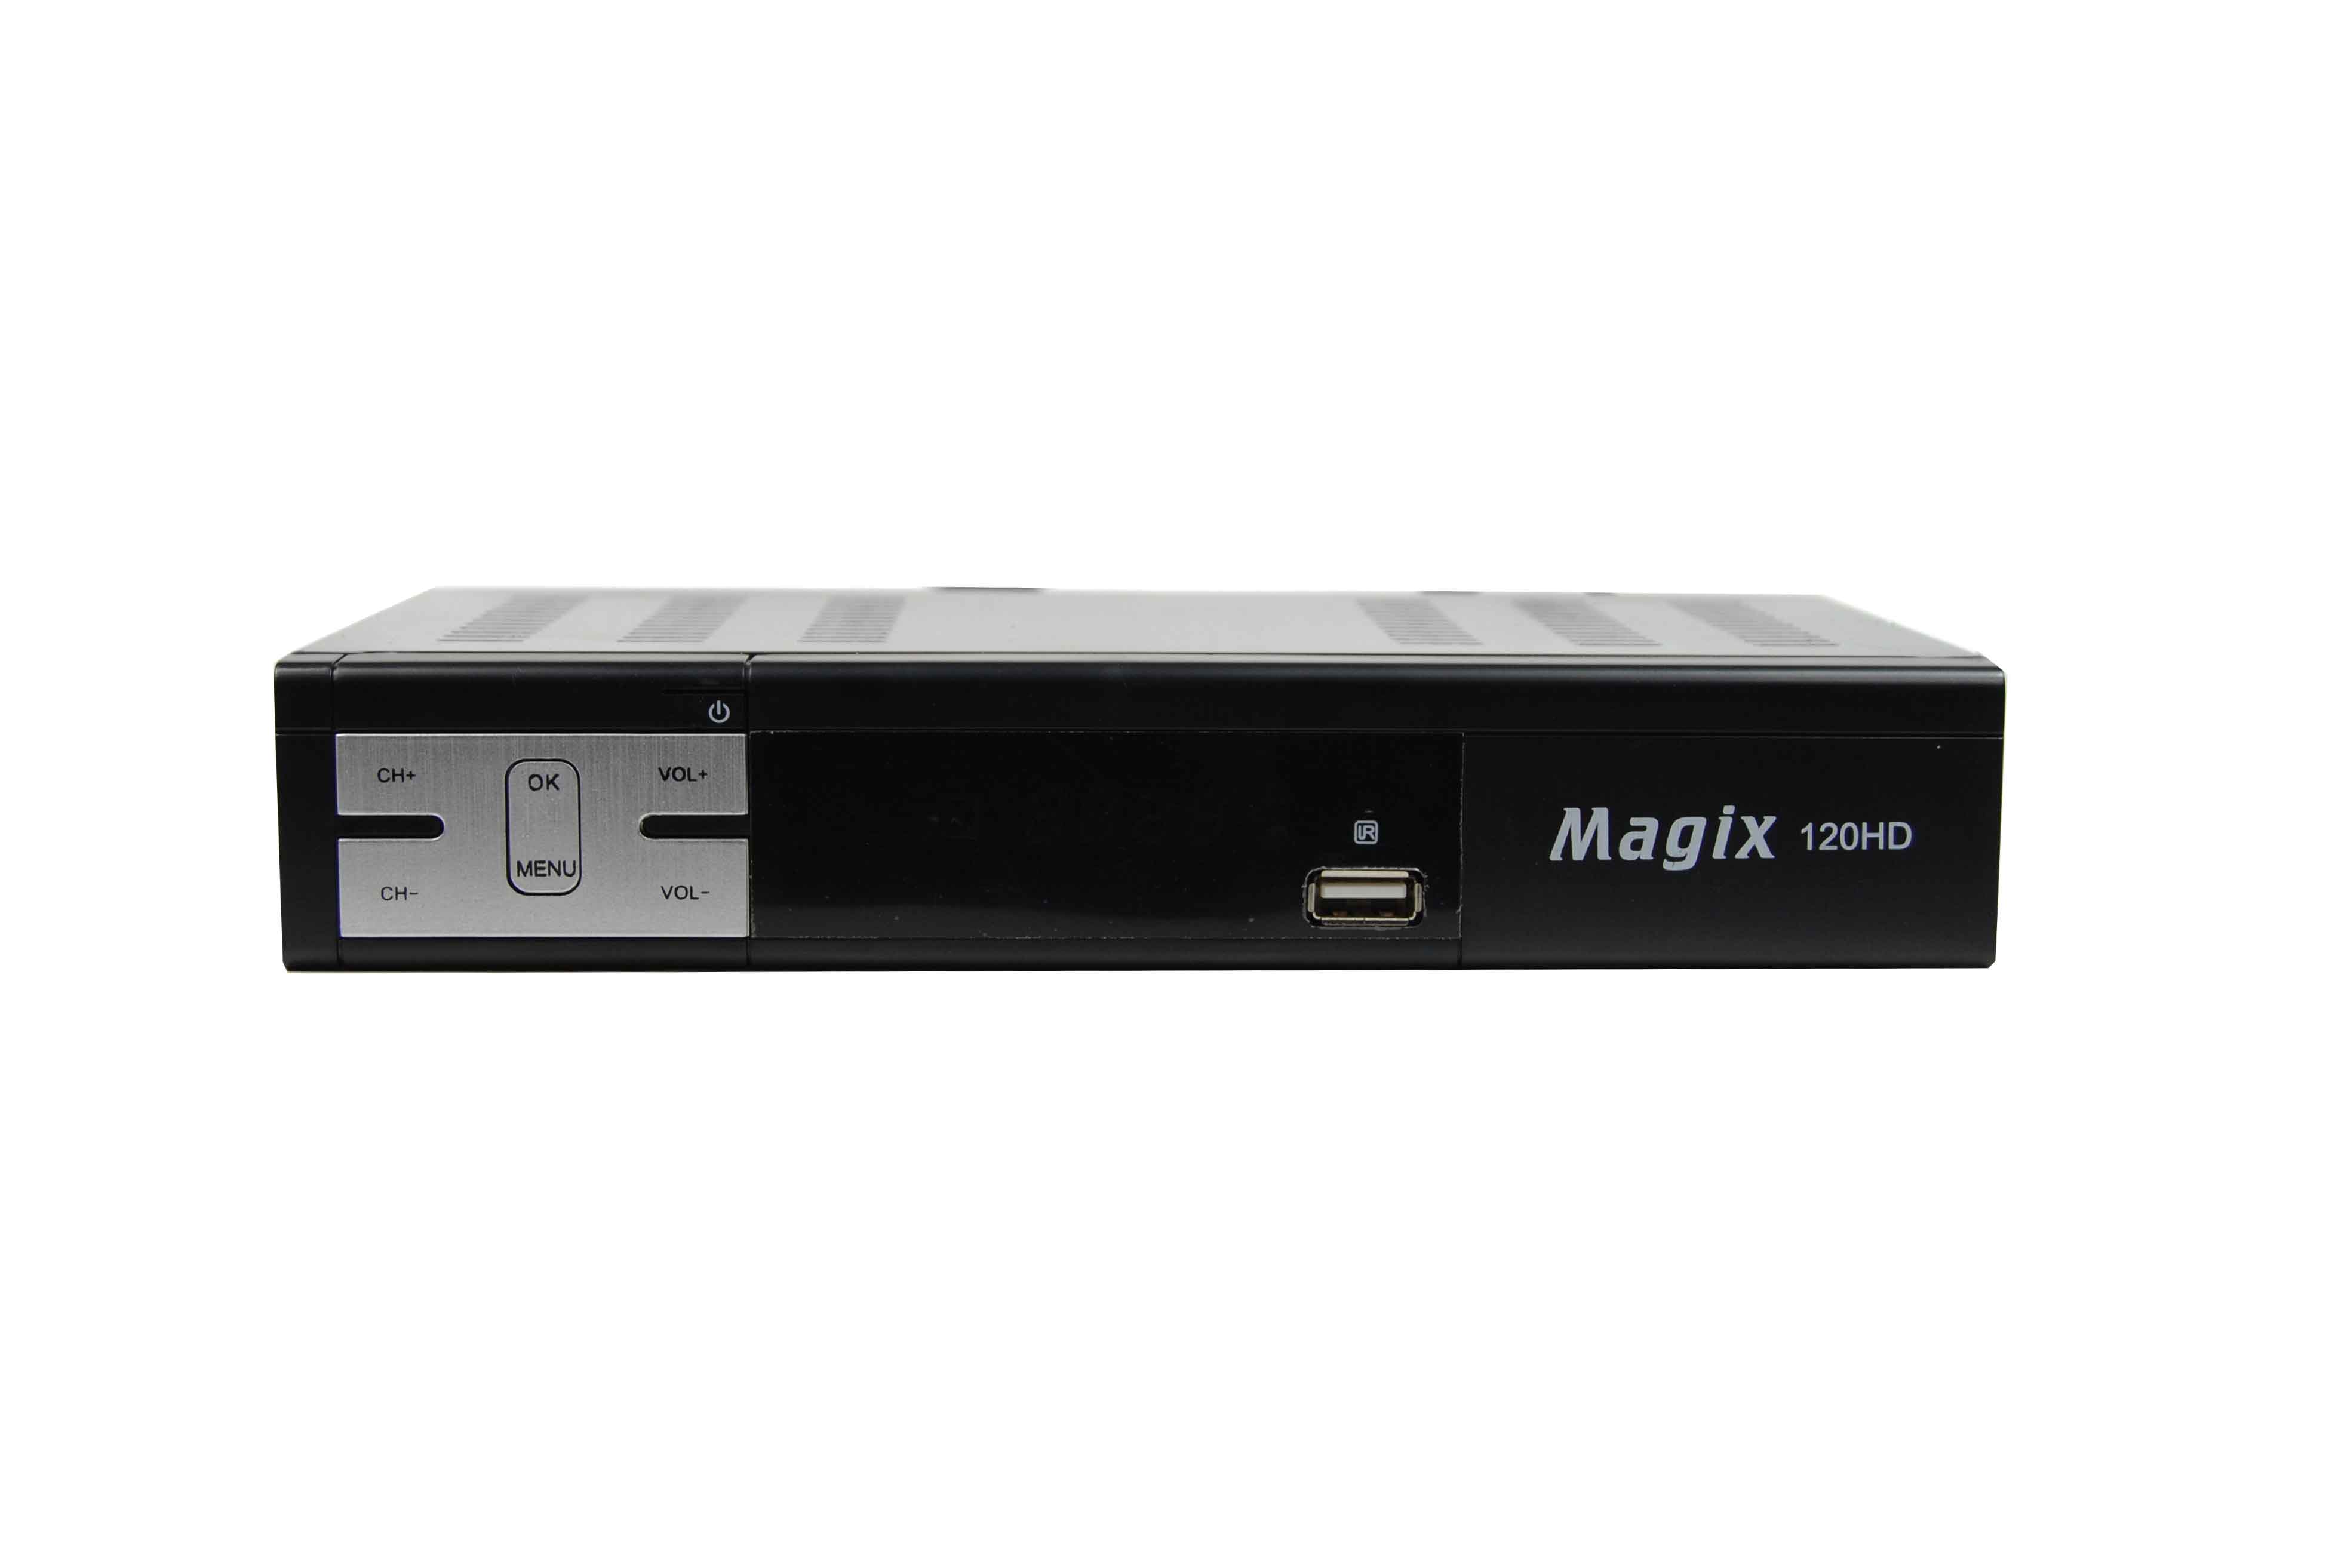 Magix DVBS2-120HD